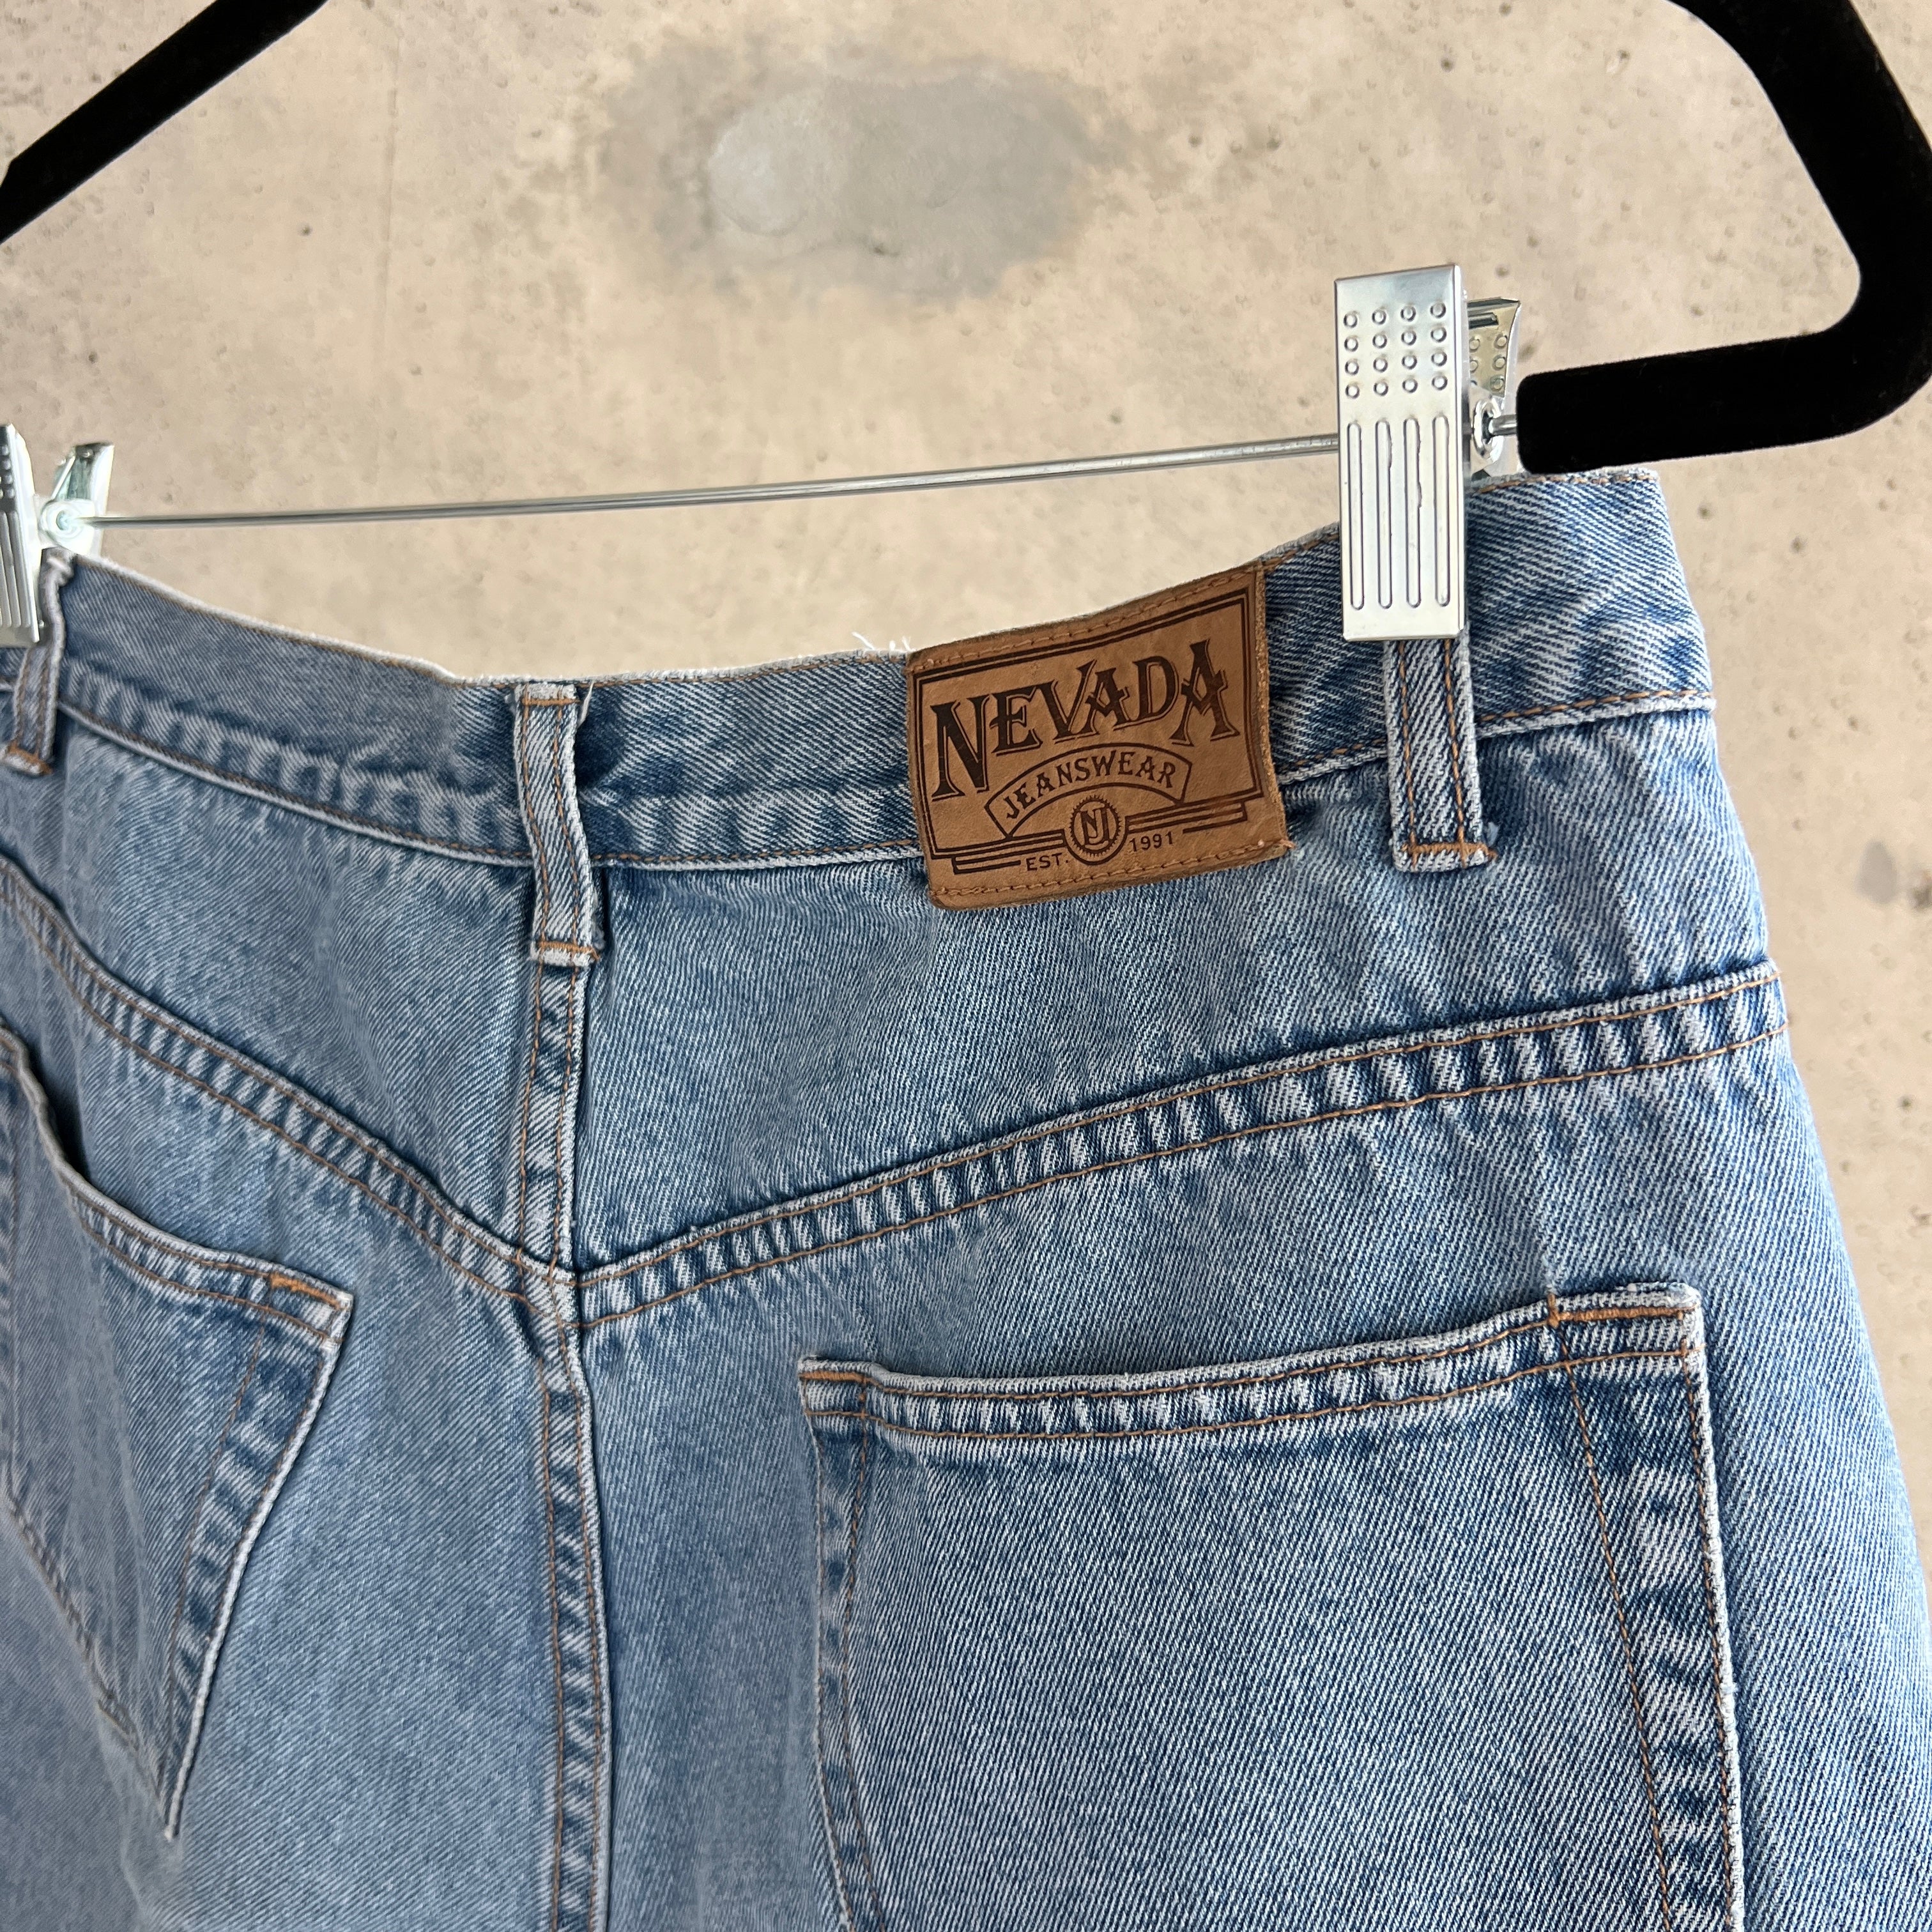 Vintage Nevada Denim Shorts